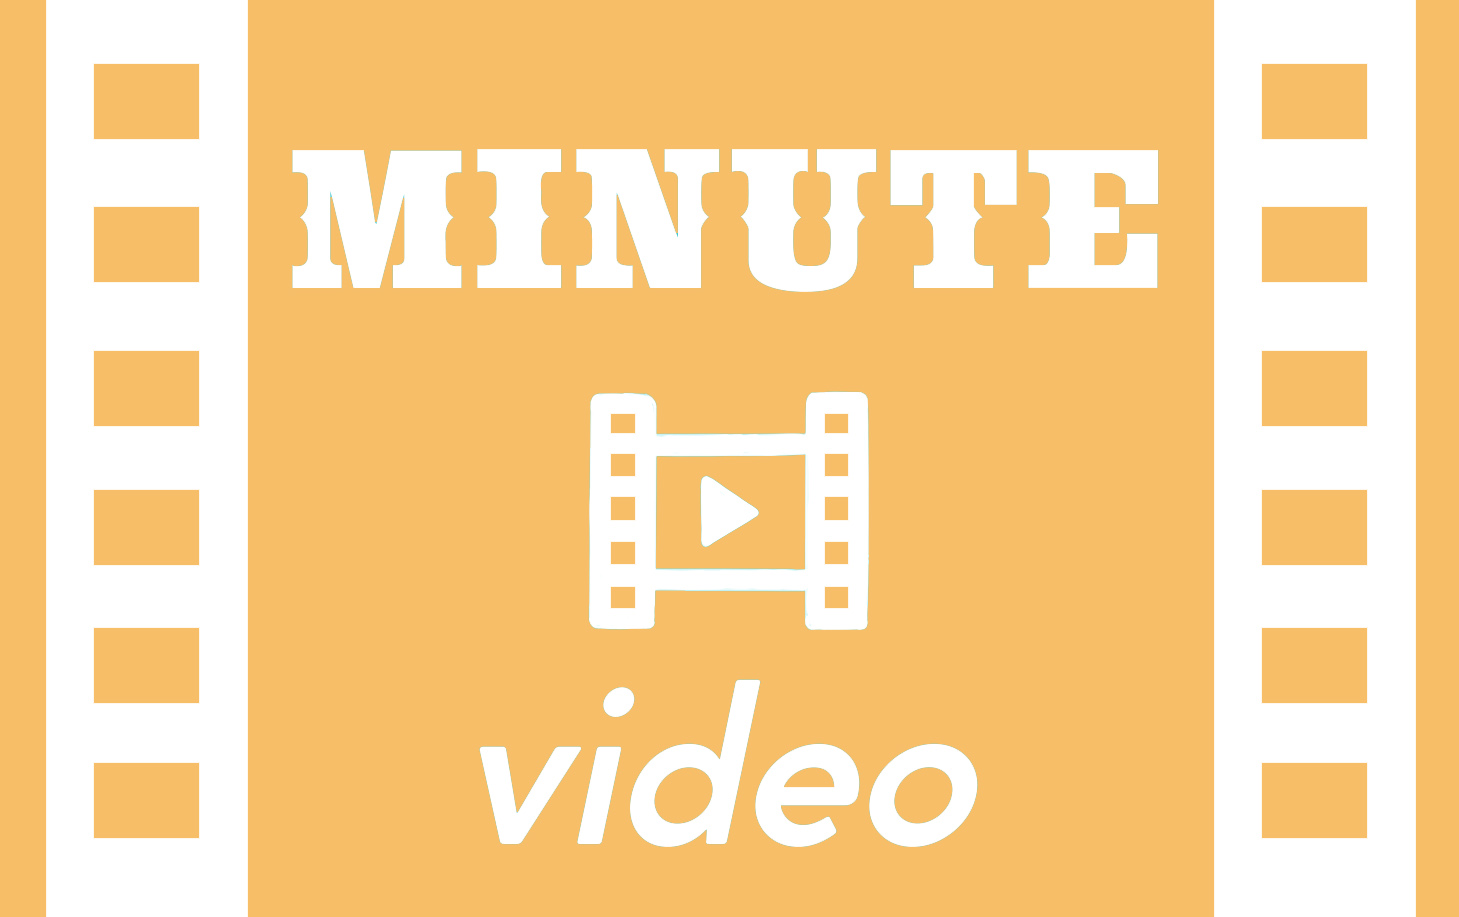 VIDEO MINUTE taronja